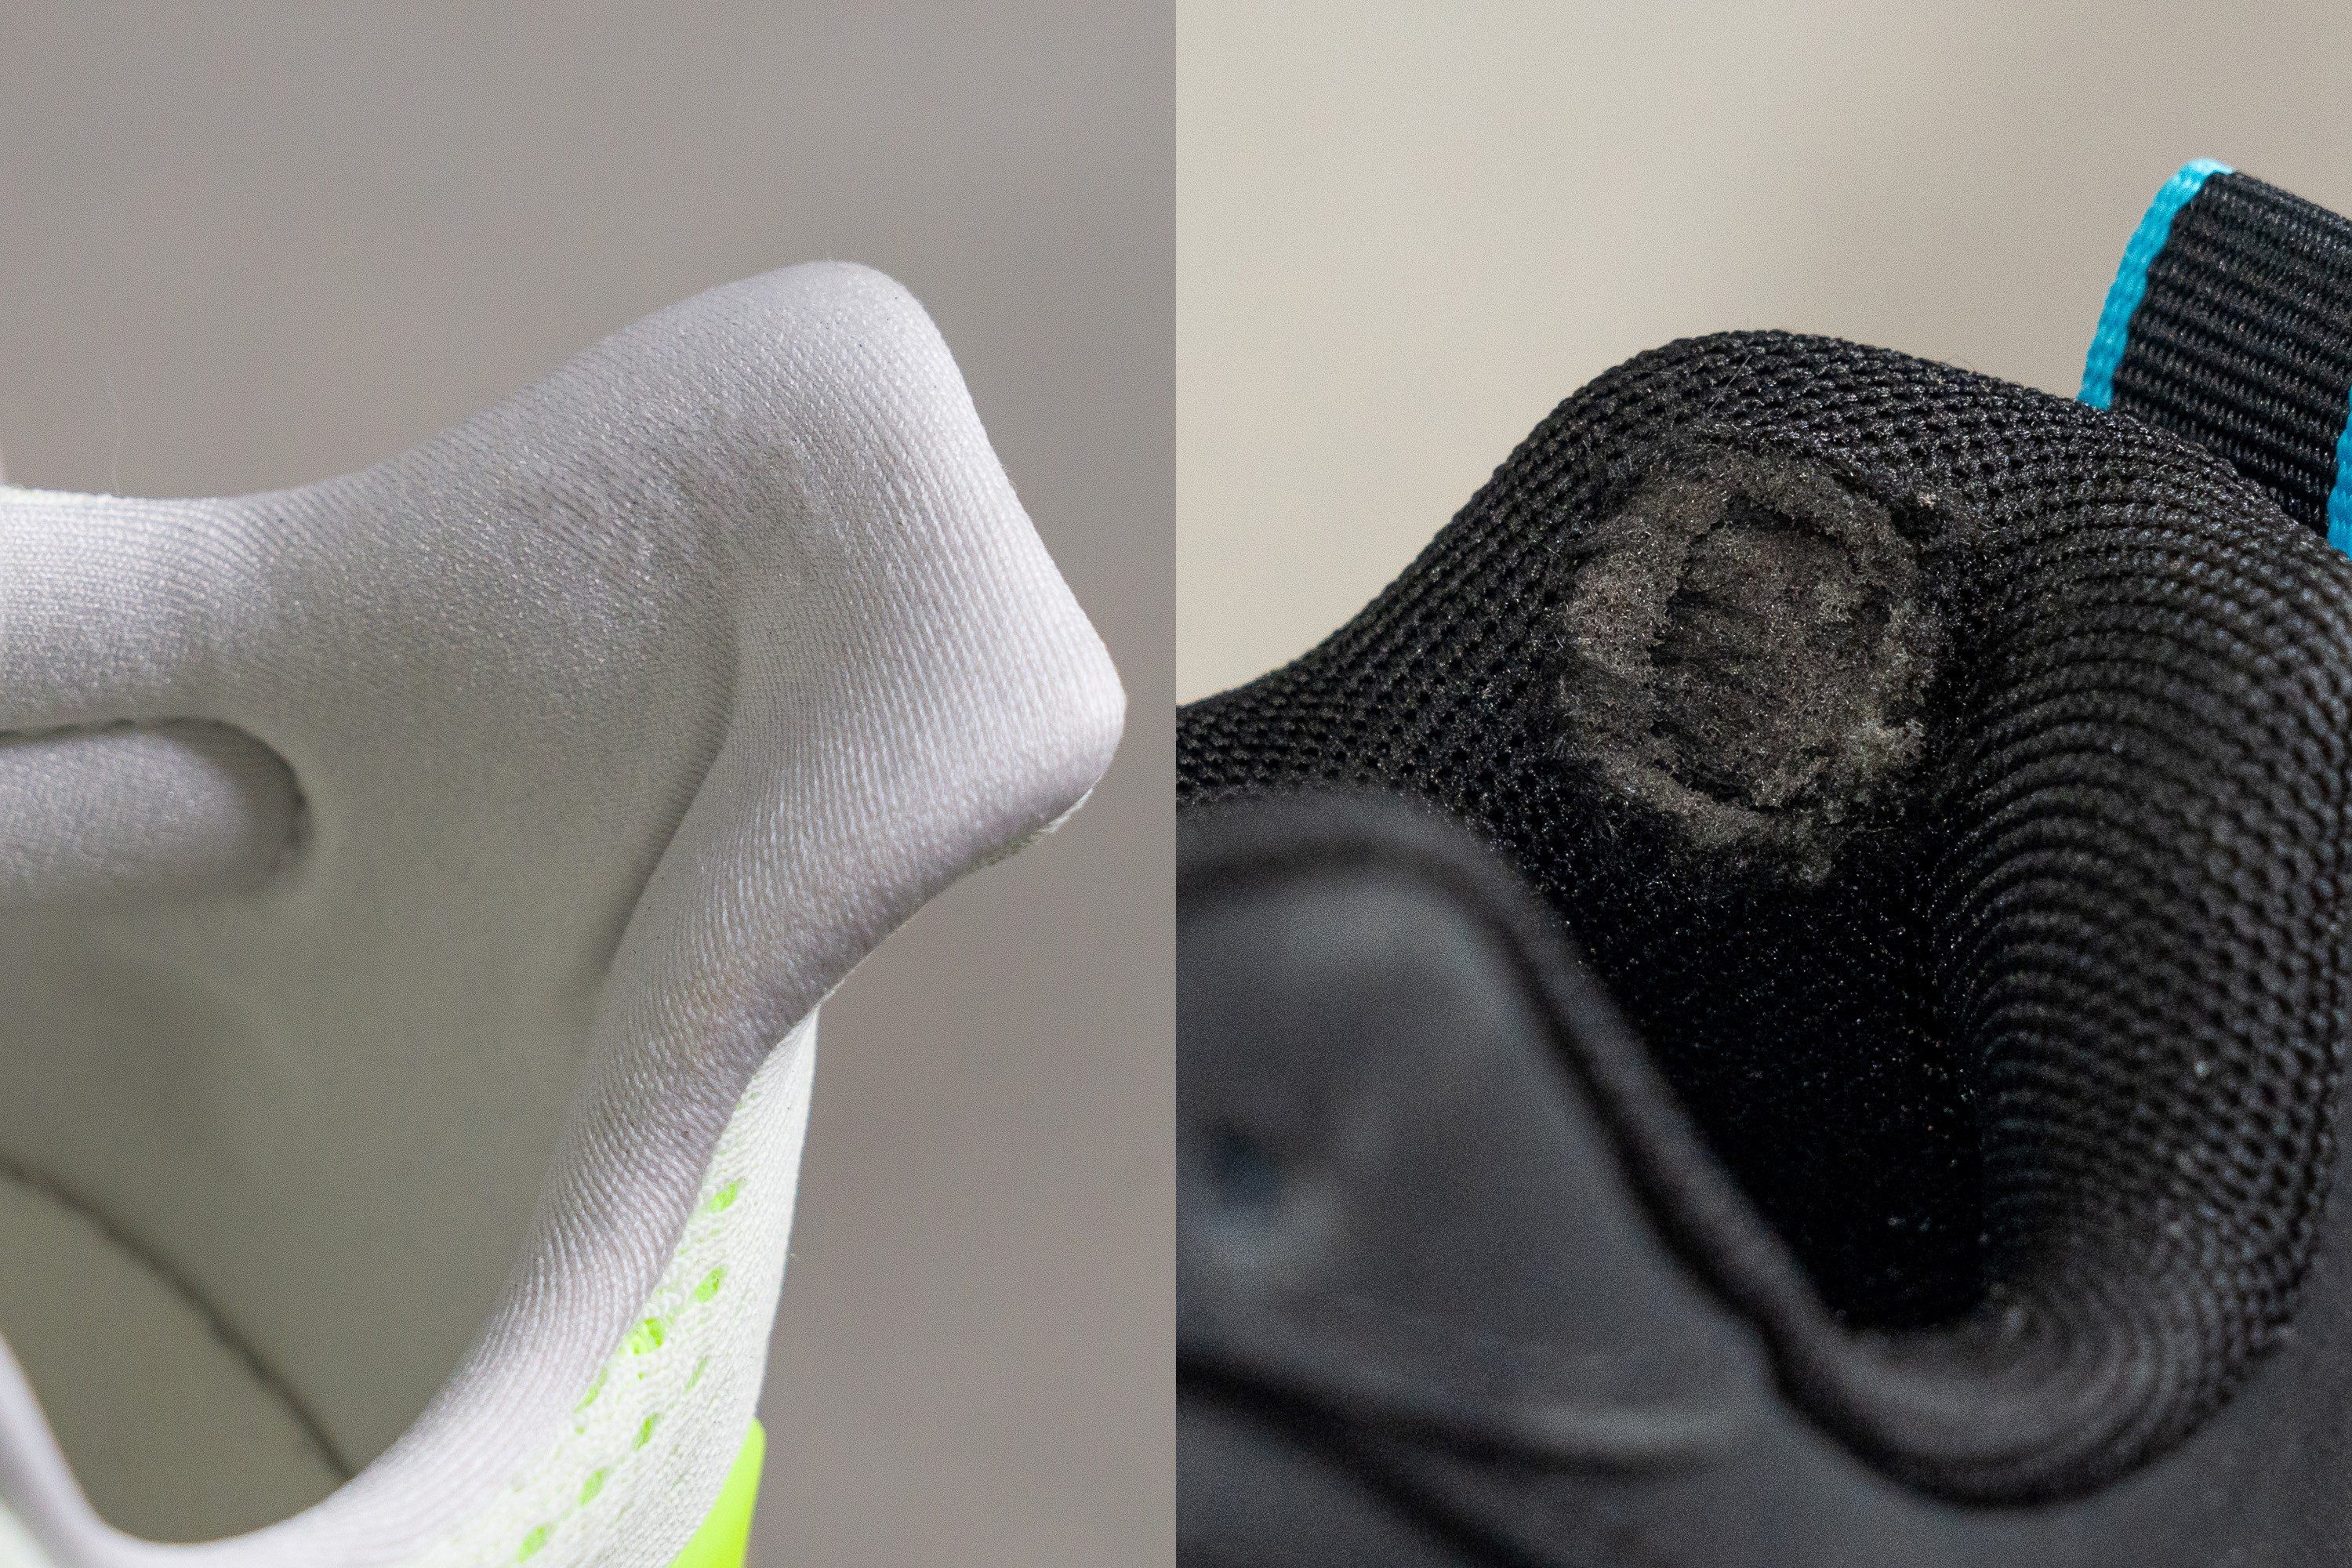 adidas Crazy Shadow 2 sneakers Heel padding durability